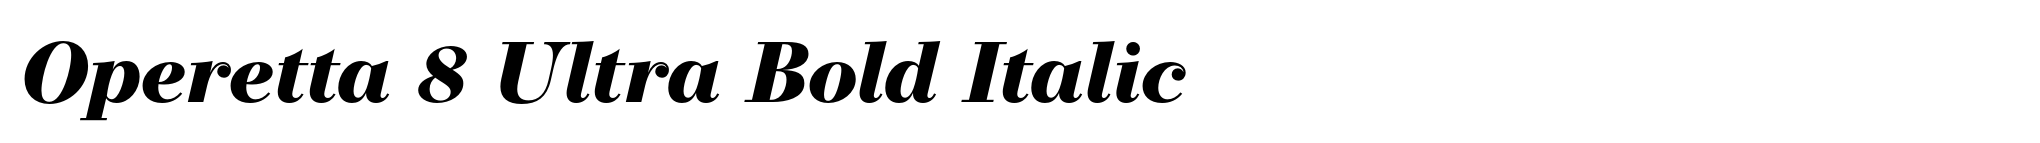 Operetta 8 Ultra Bold Italic image